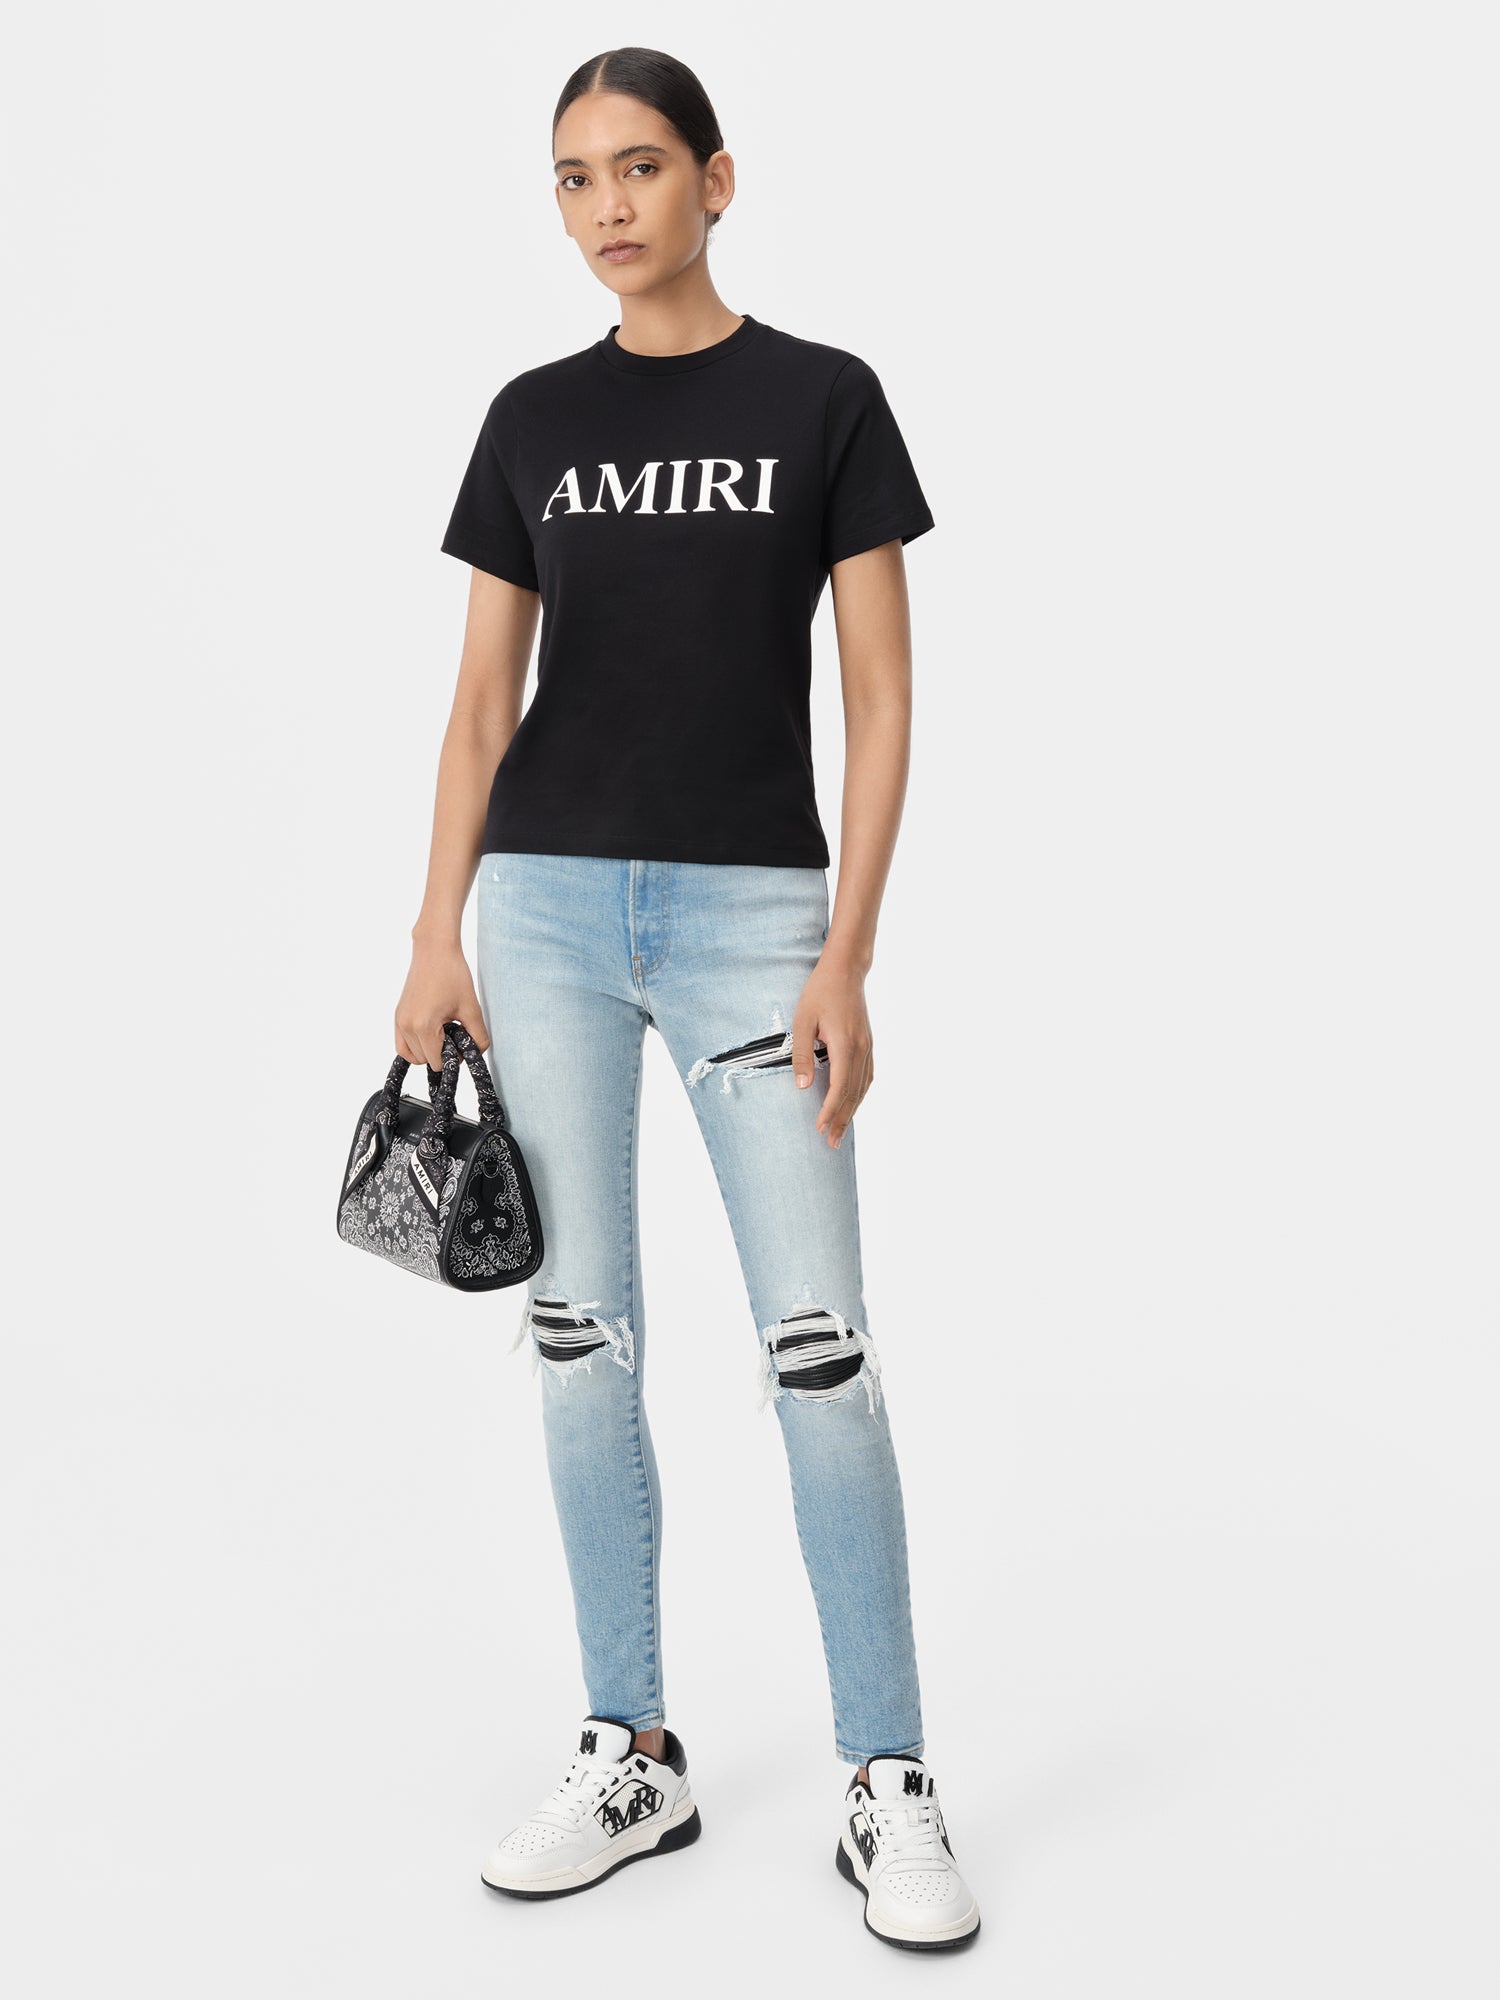 Product WOMEN - WOMEN'S AMIRI CORE LOGO TEE - Black featured image